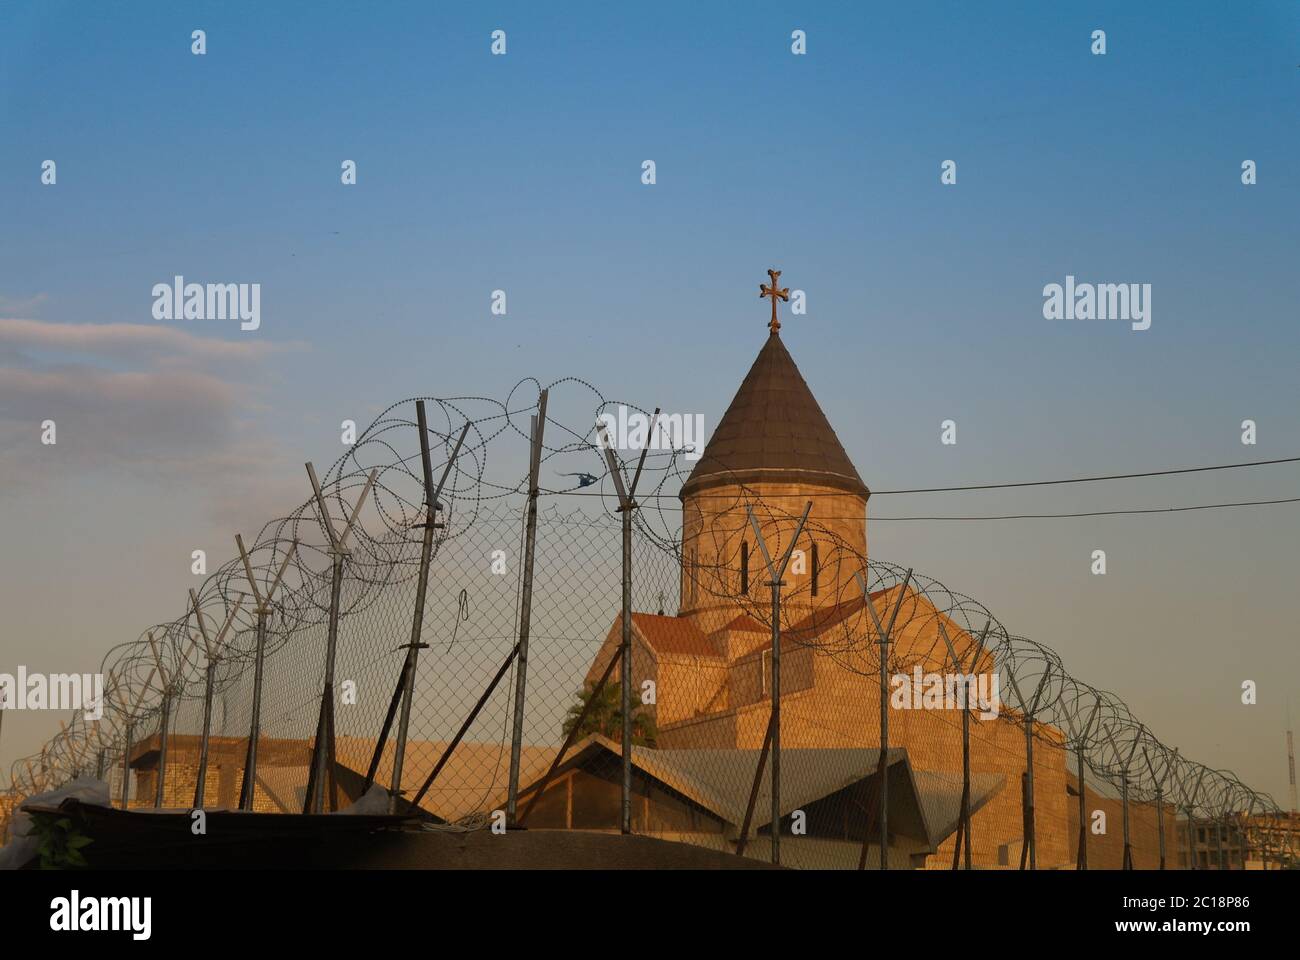 Armenische Kirche hinter Stacheldraht, Bagdad Irak Stockfoto